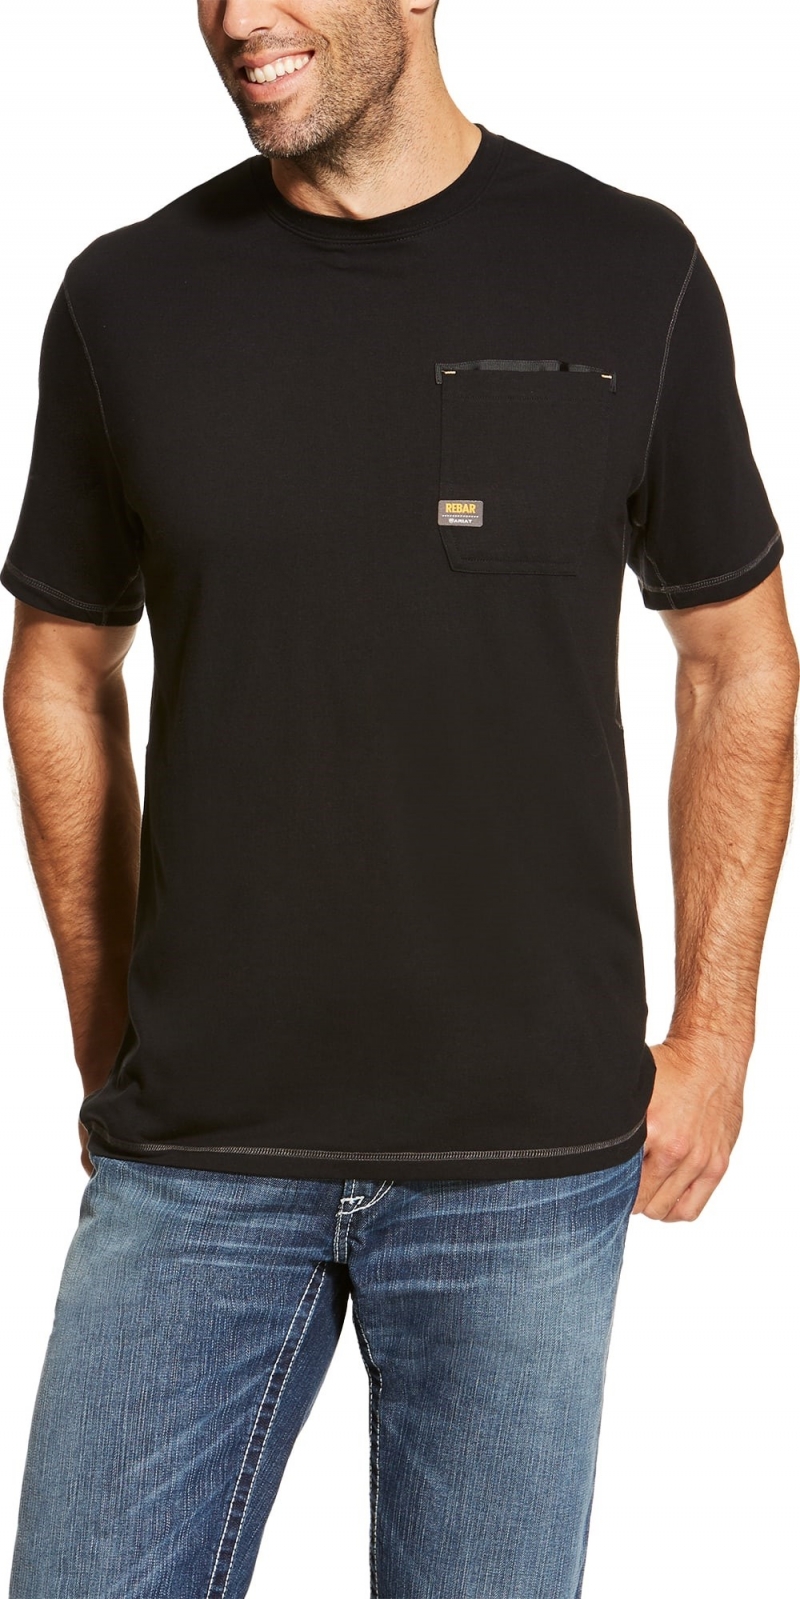 Ariat Rebar Workman Crewneck Pocket S/S Shirt  - Black